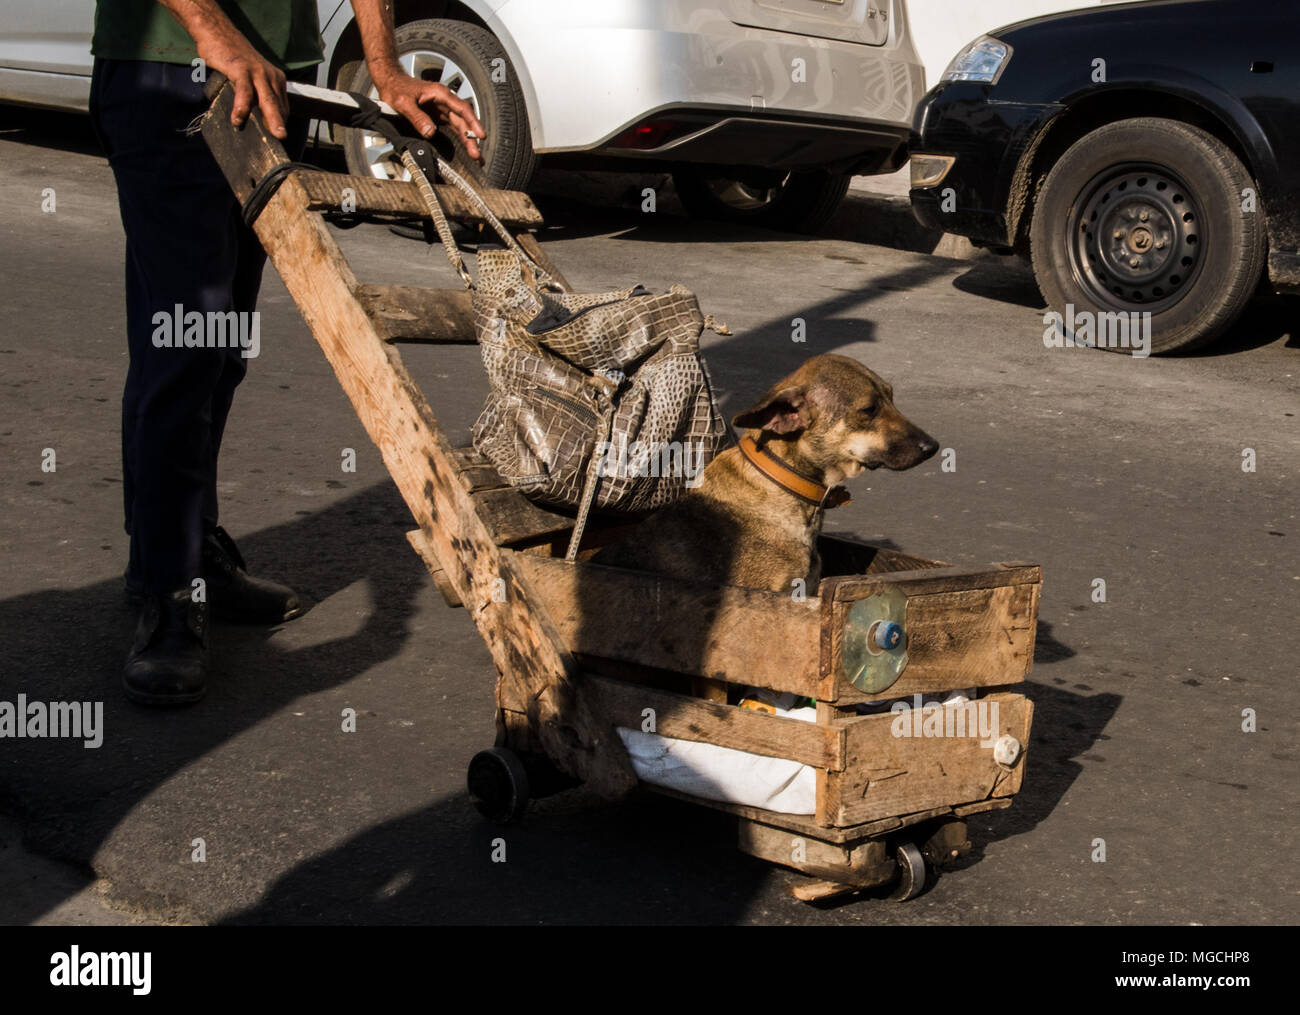 Man pushing a hand made wheelbarrow, pet dog sitting in wheelbarrow, low section, Havana, Cuba Stock Photo